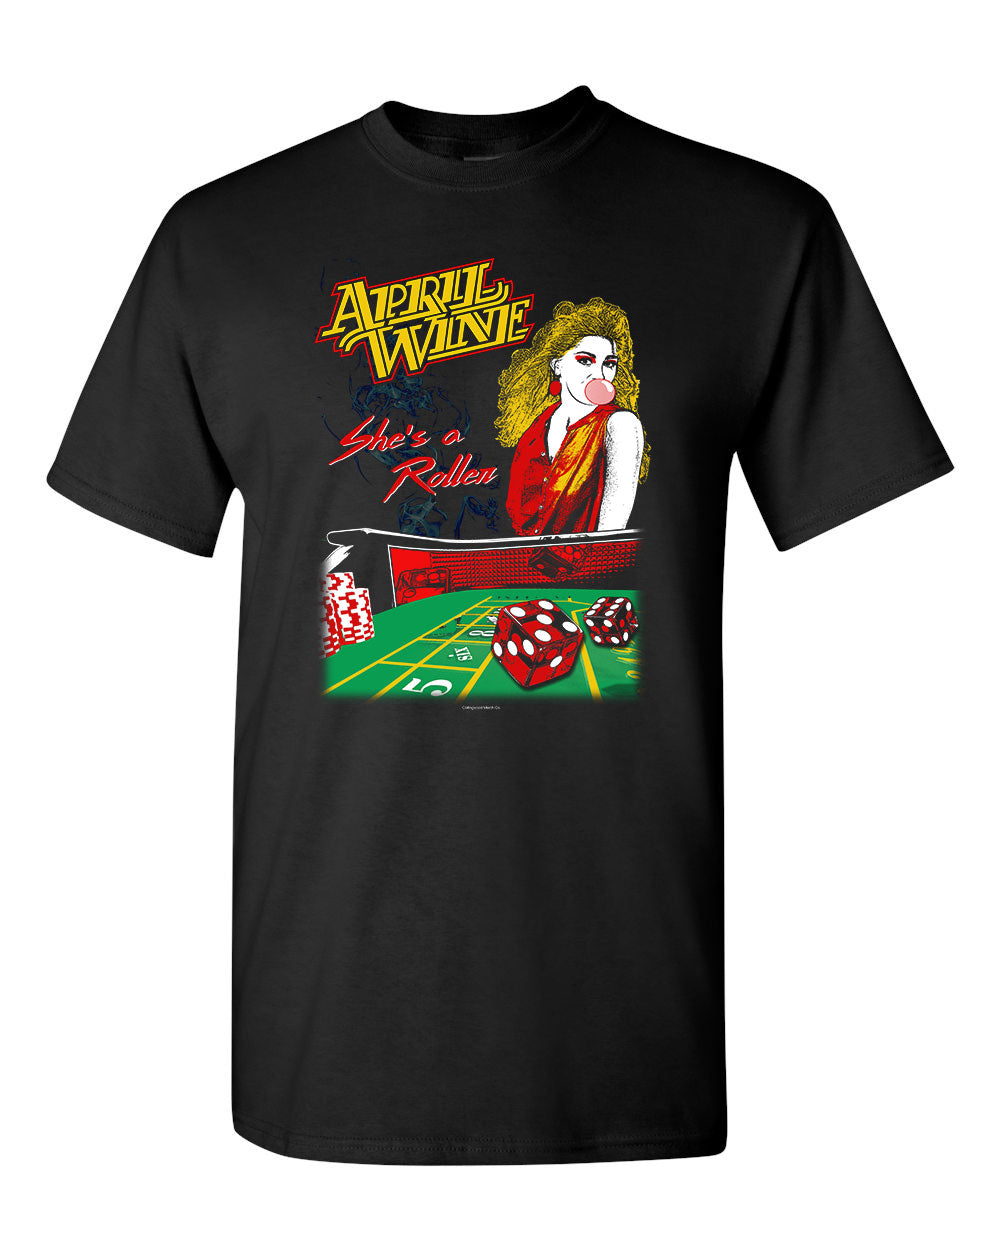 *NEW* April Wine - Roller T-shirt